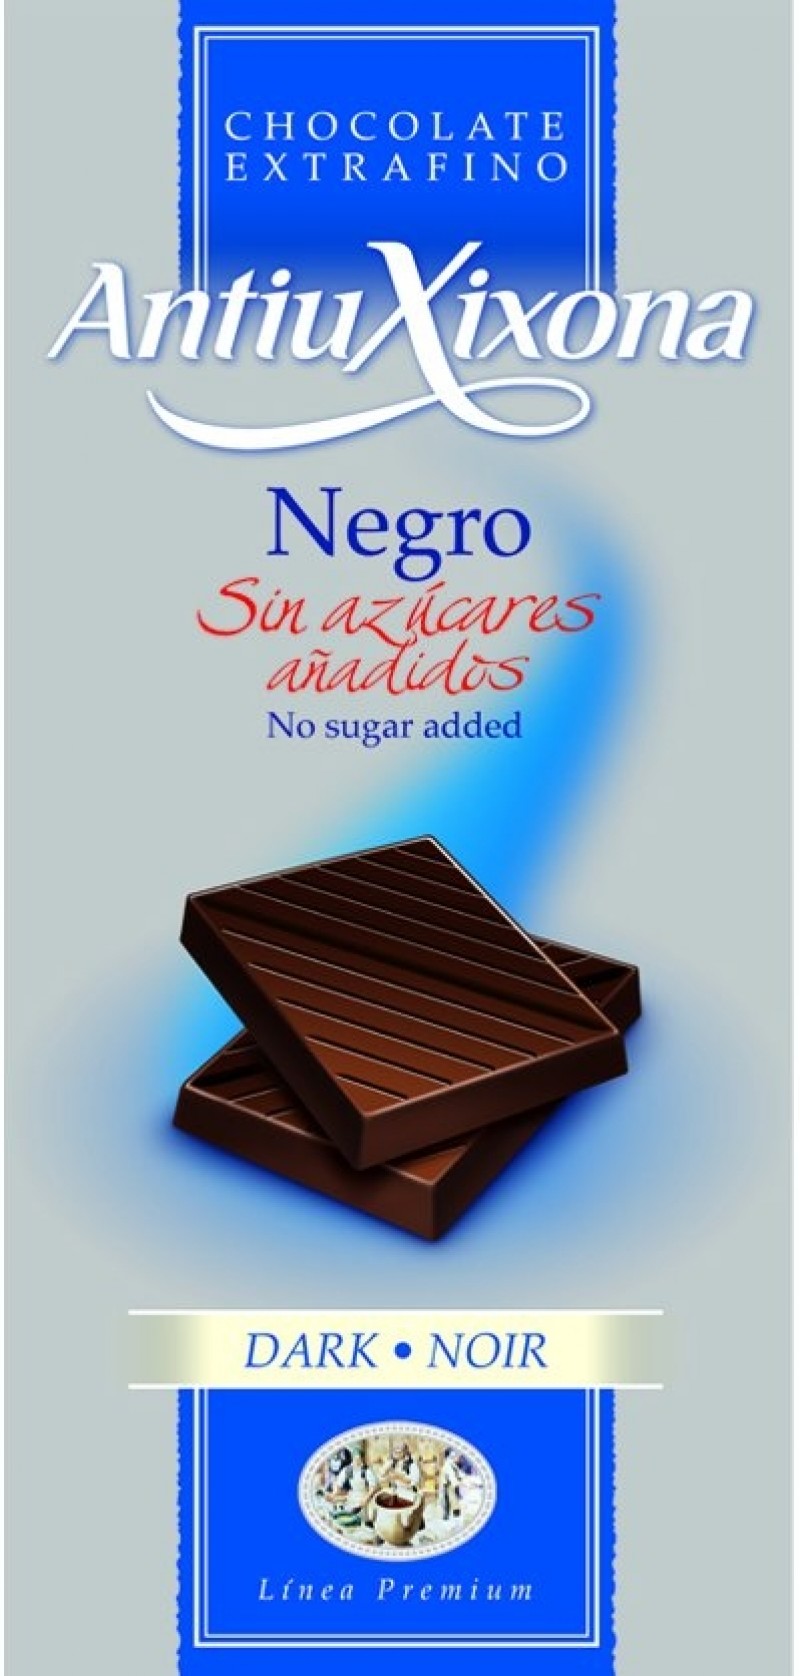 chocolate-negro-sin-azucares-anadidos-antiu-xixona